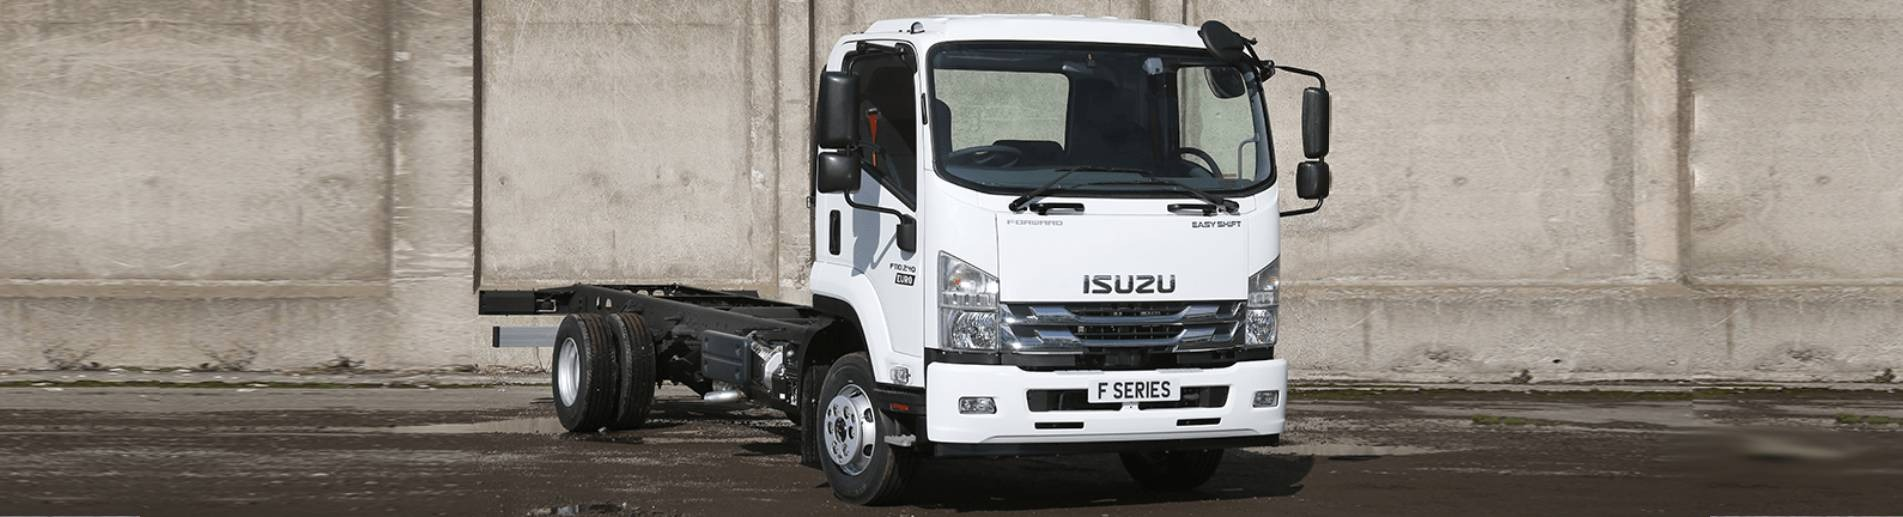 11 Tonne and 13.5 Tonne Trucks - Isuzu Trucks, Ilkeston, Derbyshire